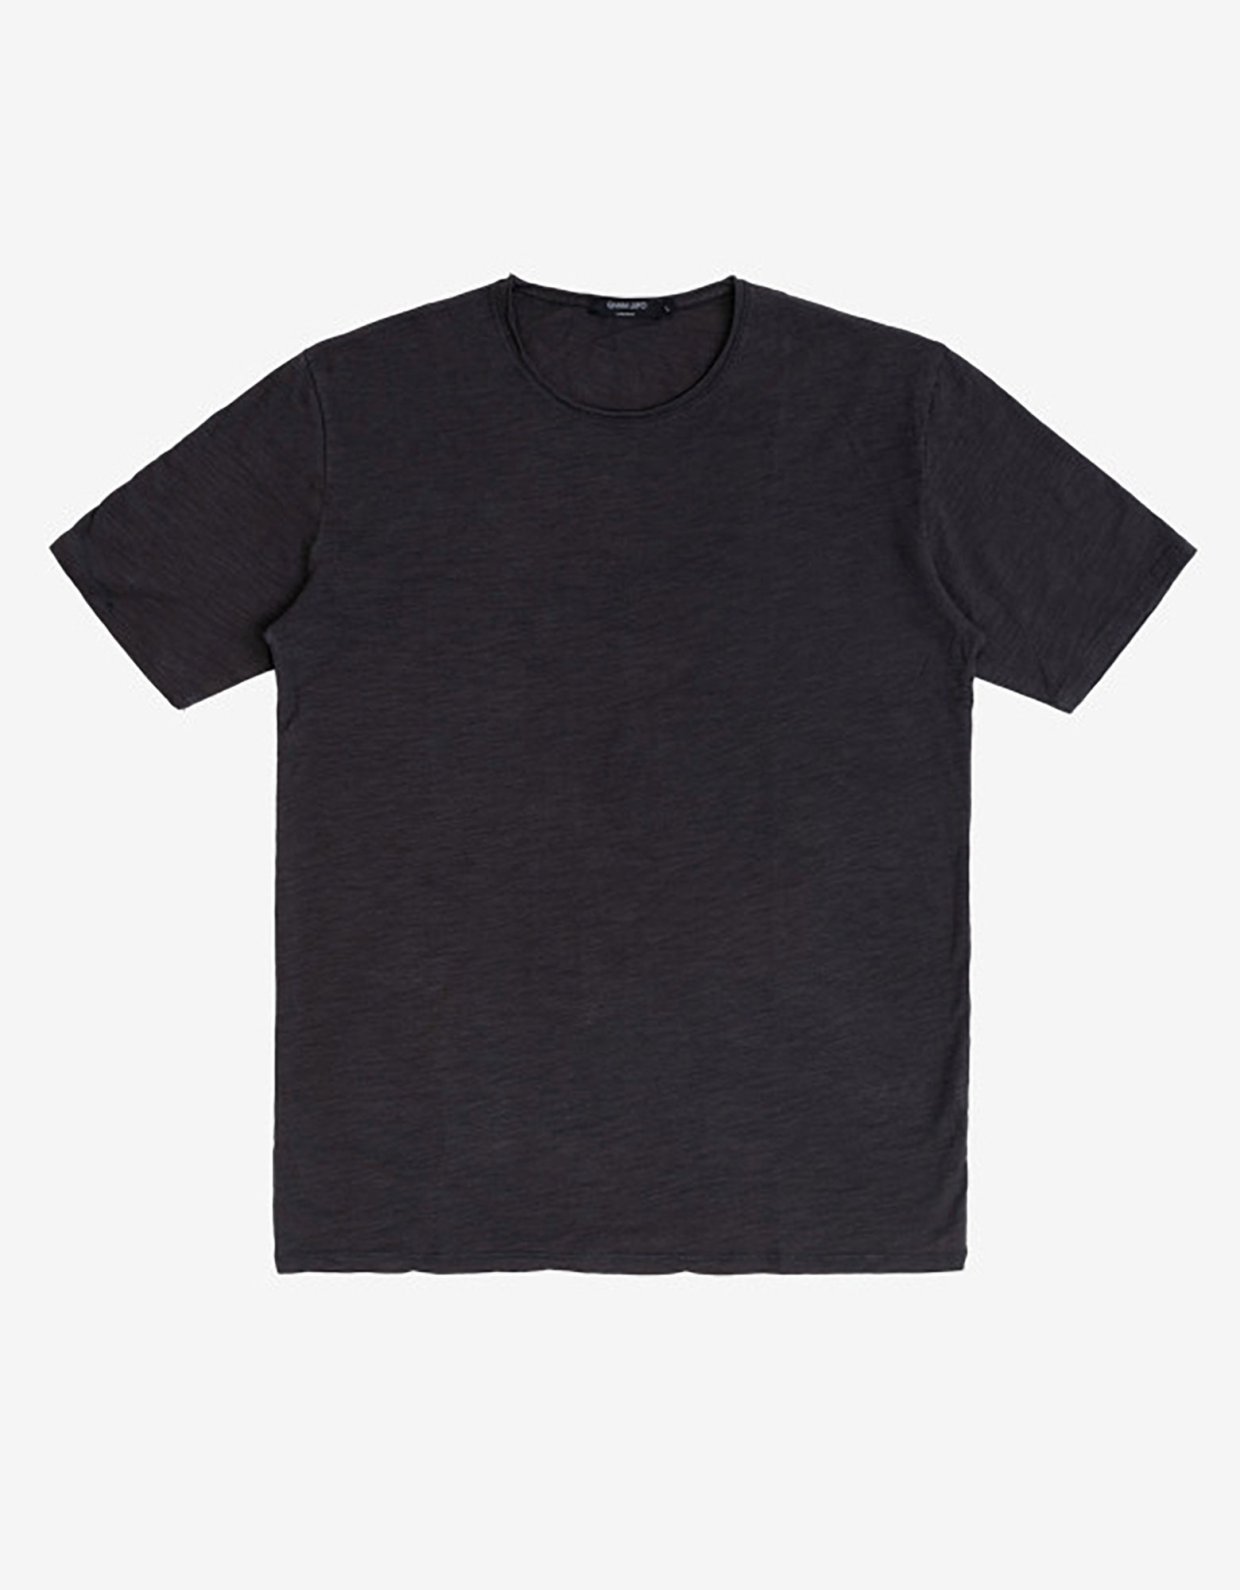 Gianni Lupo T-shirt black